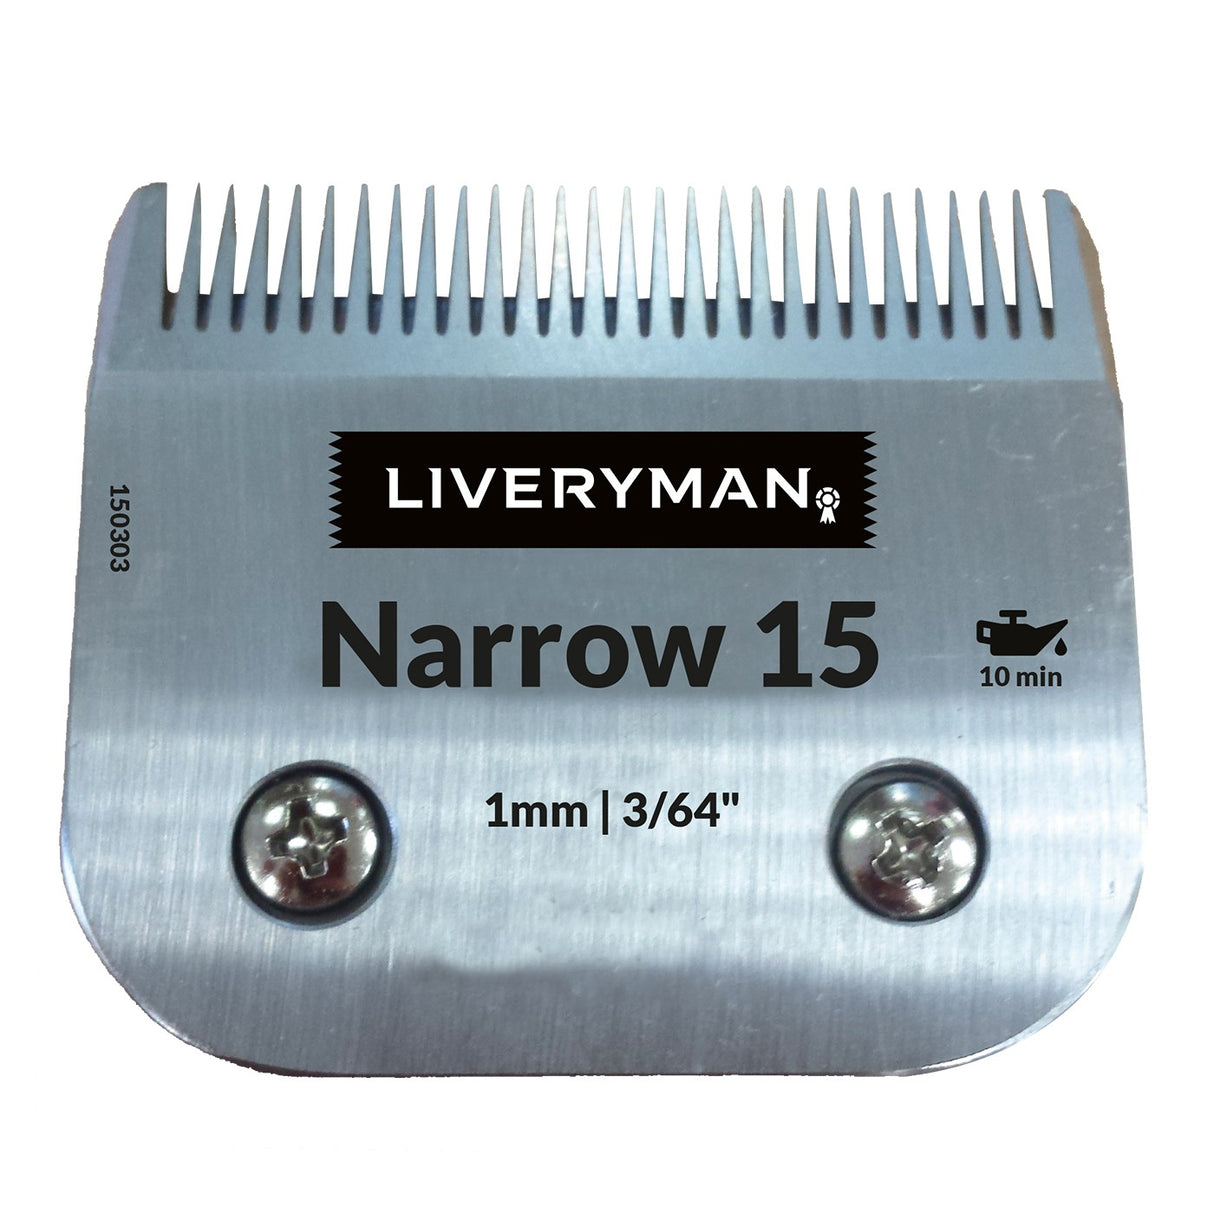 Liveryman Cutter & Comb Narrow 15/1.0mm Blade